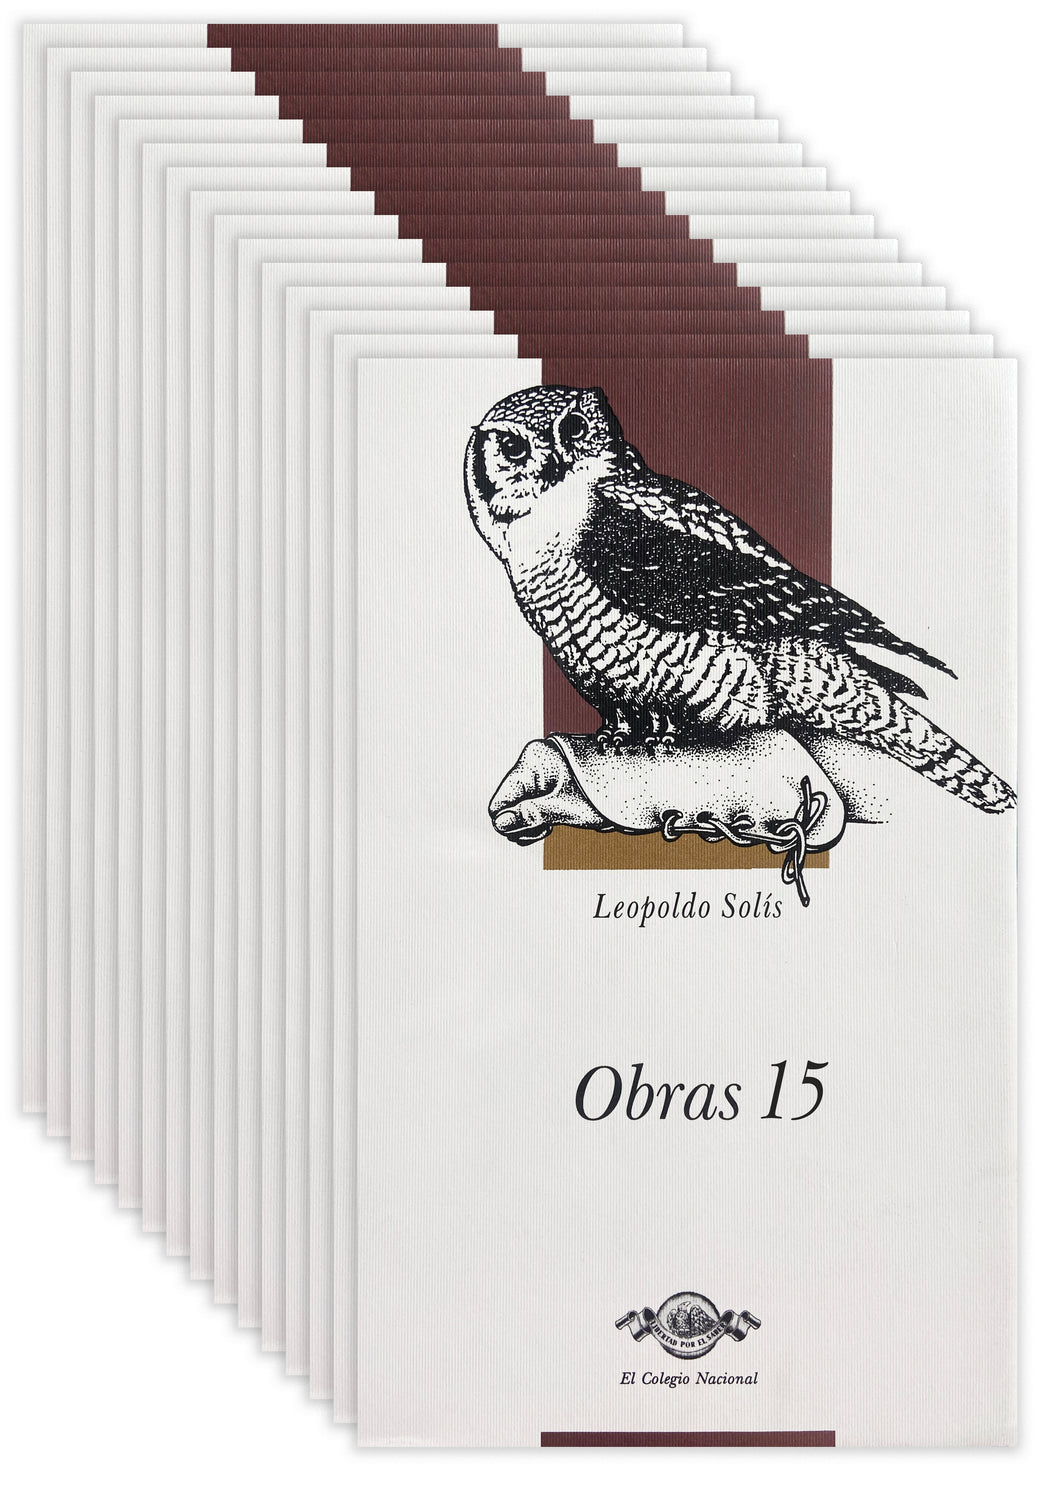 Obras 1-15 (15 vols.), Leopoldo Solís.